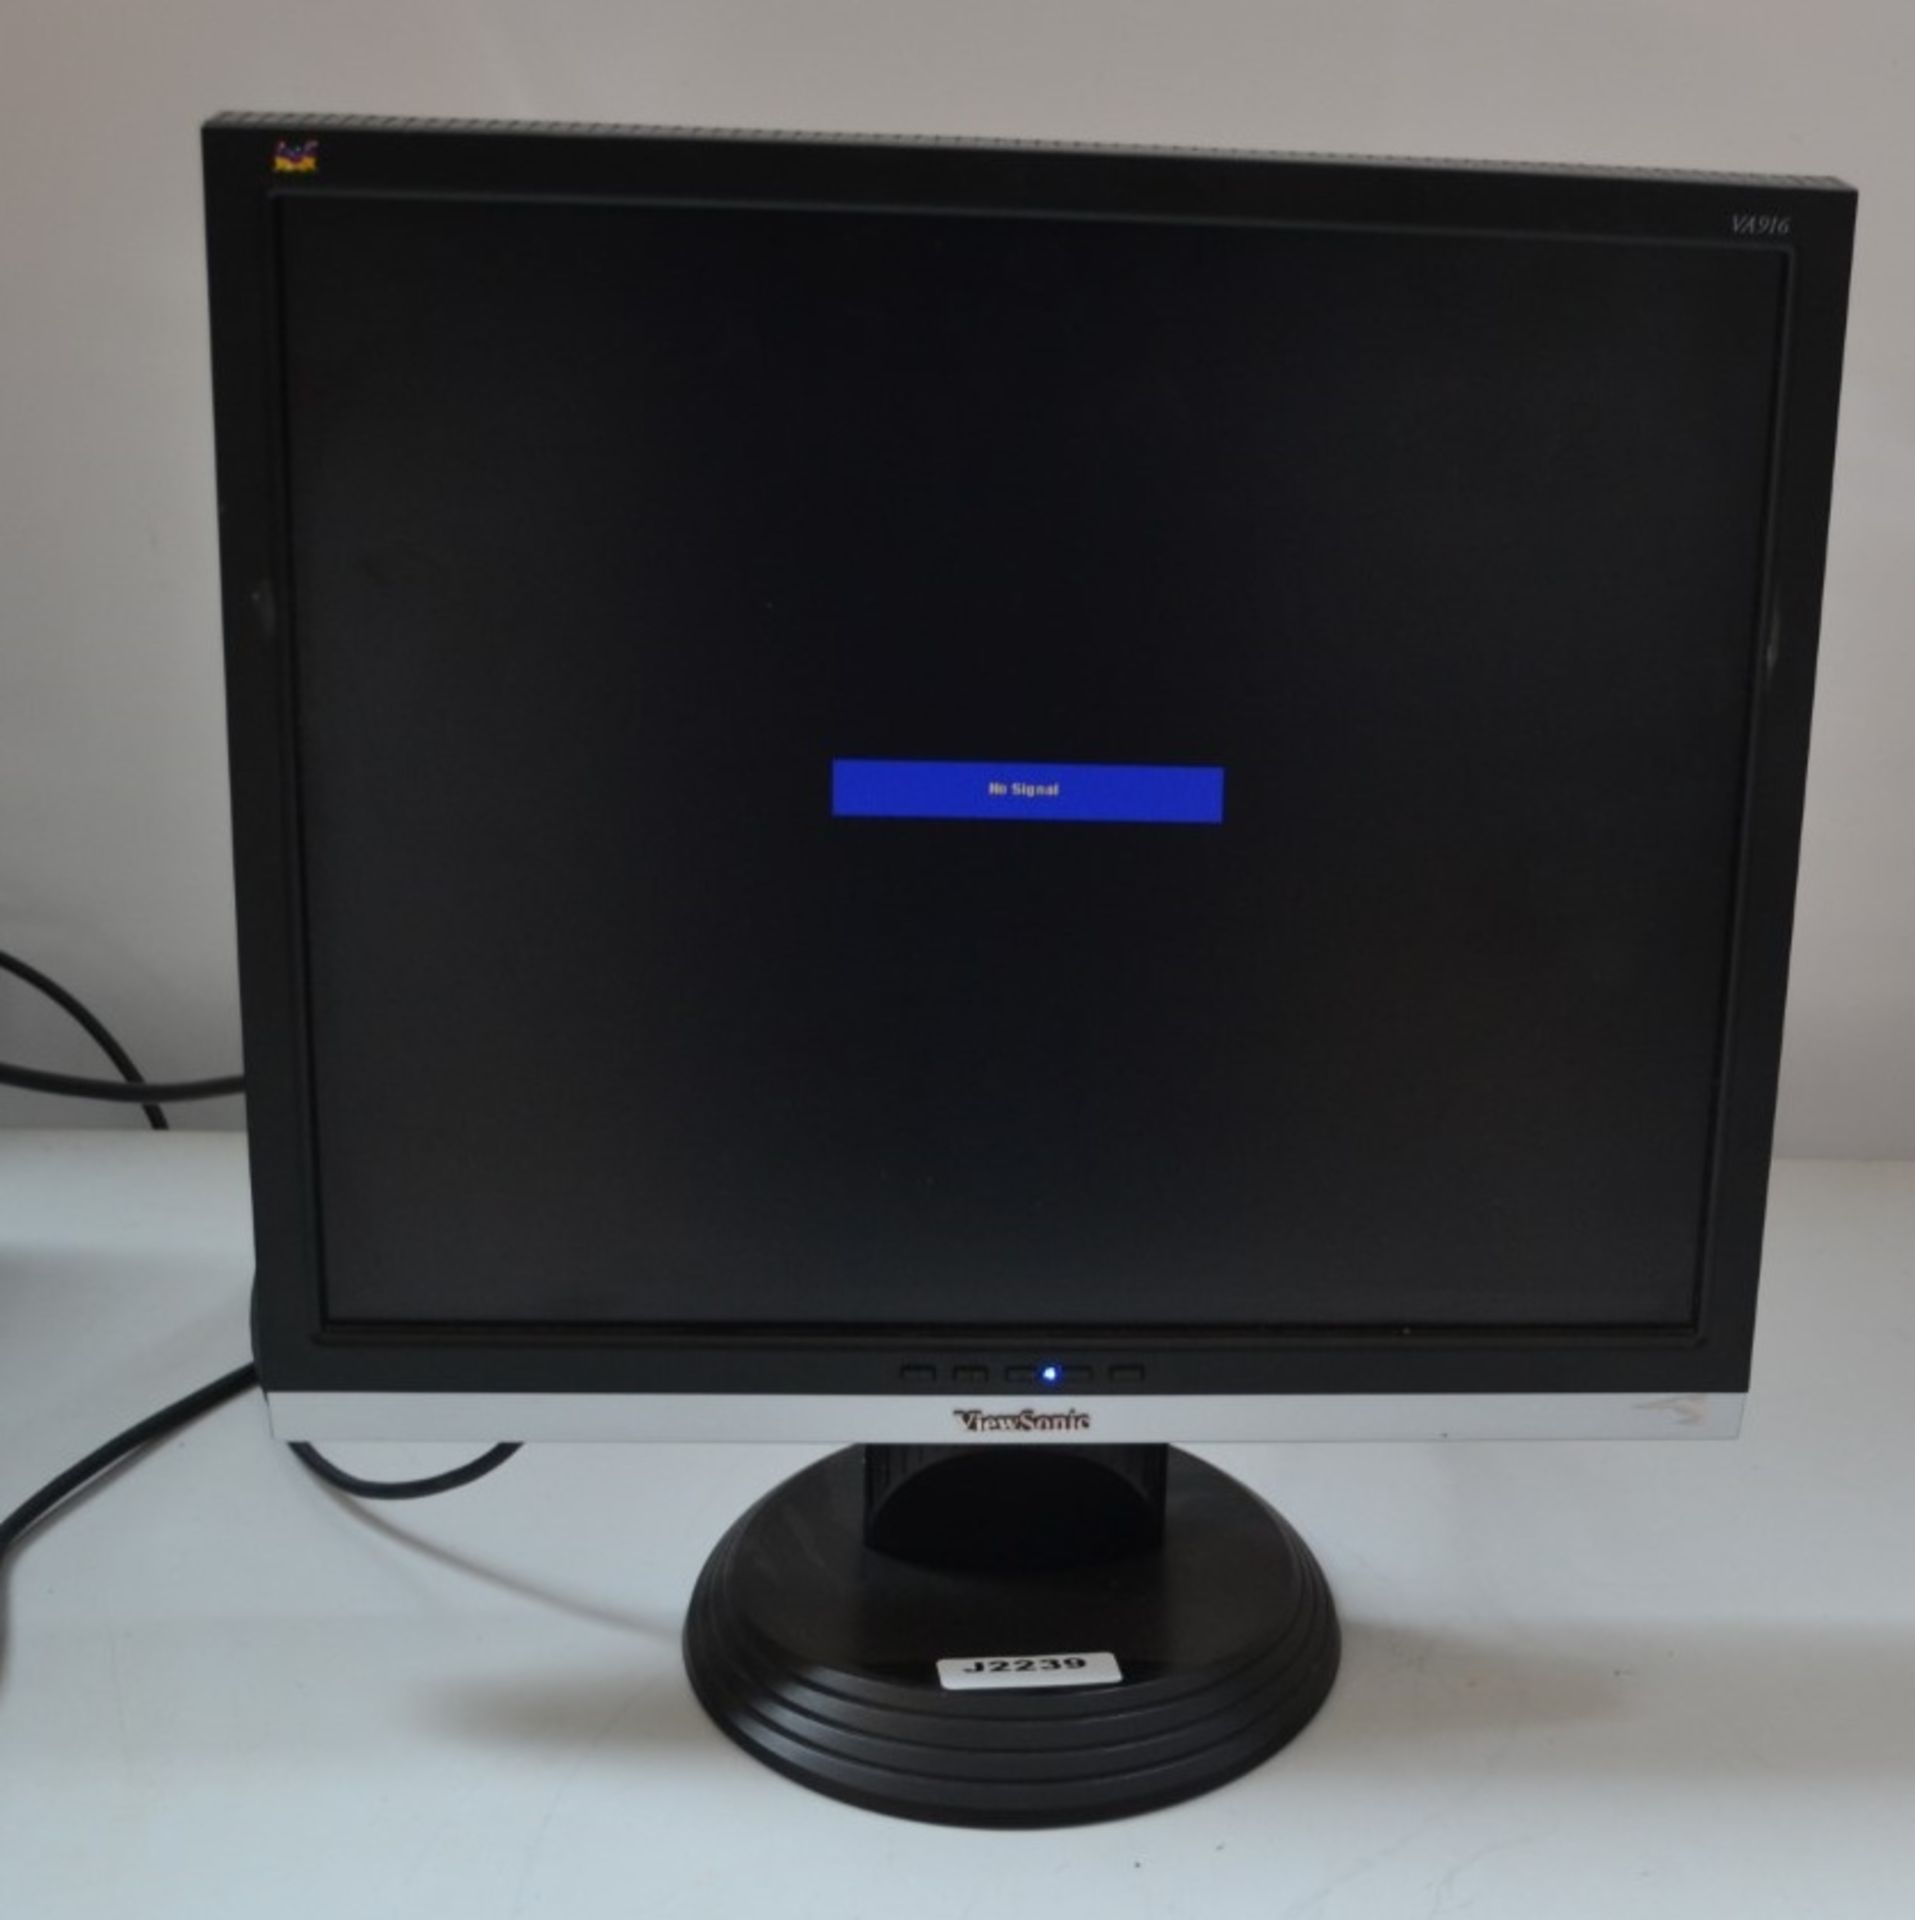 1 x ViewSonic VA916 19" LCD PC Monitor - Ref J2239